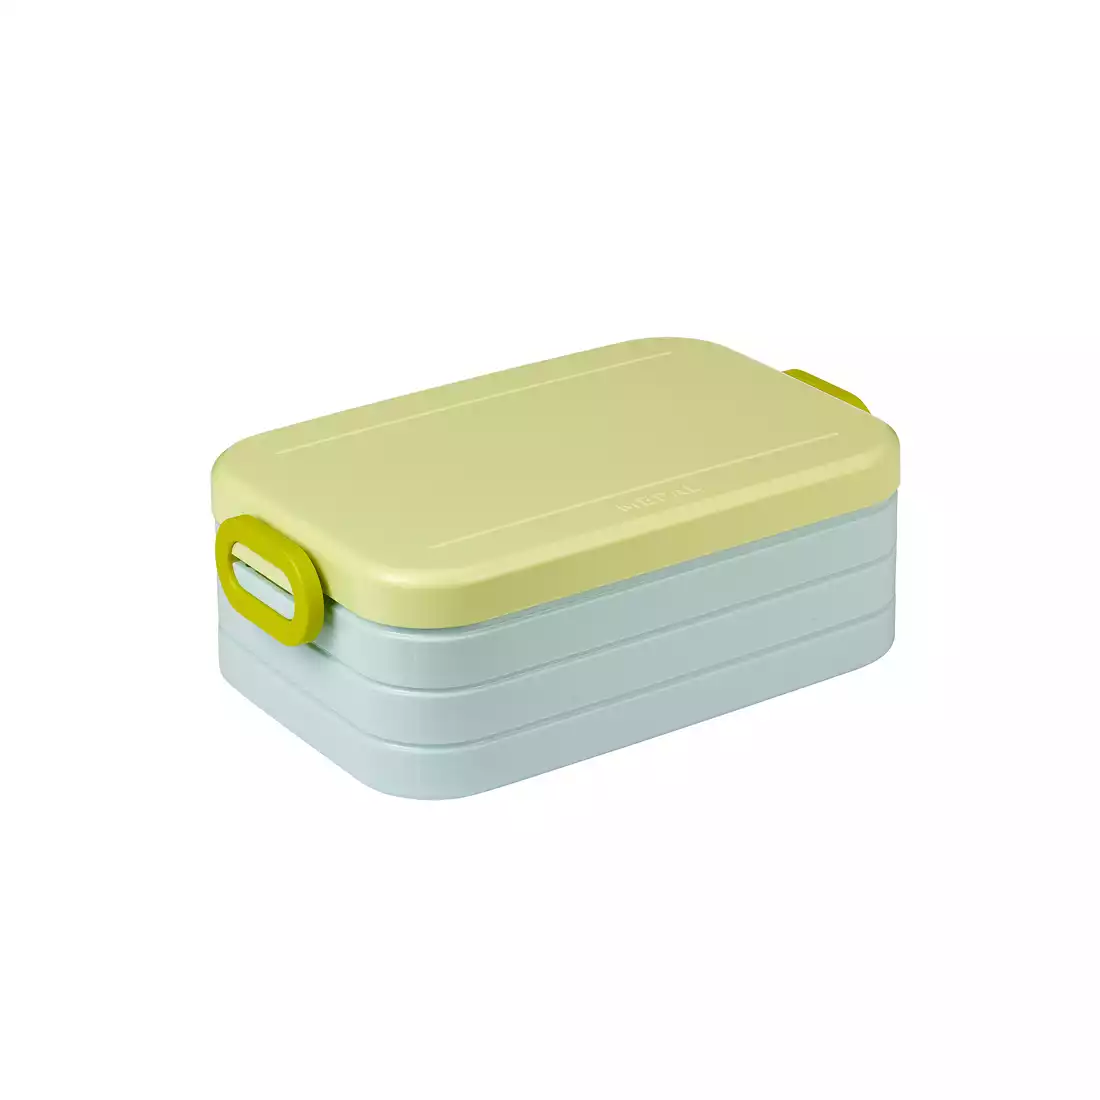 Mepal Take a Break Bento midi Lemon Vibe lunchbox, mátově žlutá